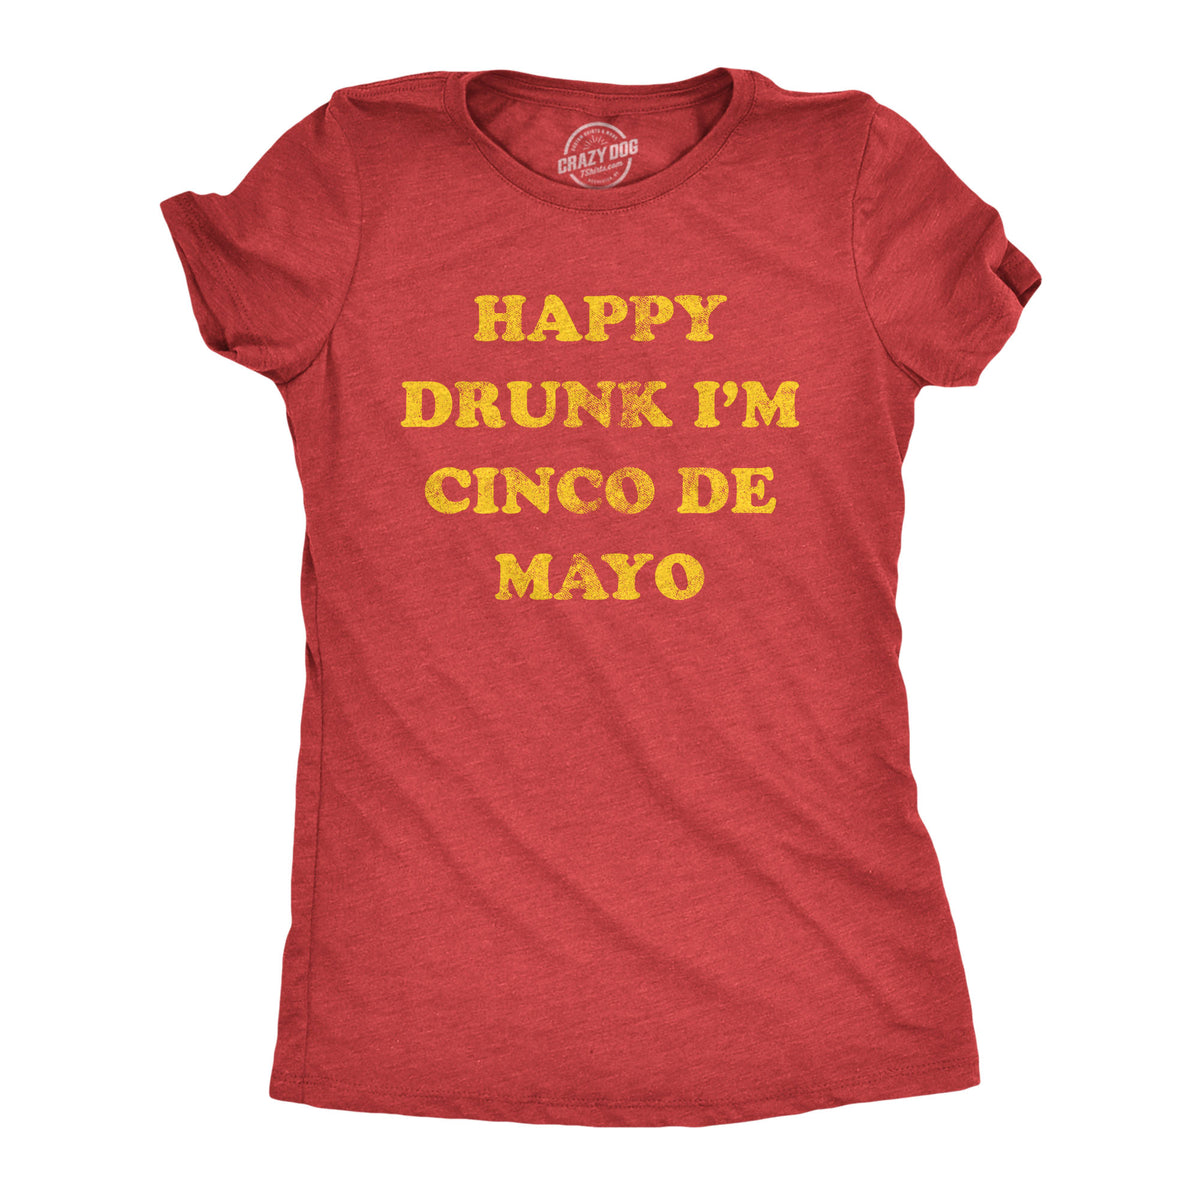 Funny Heather Red - DRUNK Happy Drunk Im Cinco De Mayo Womens T Shirt Nerdy Cinco De Mayo Drinking Tee